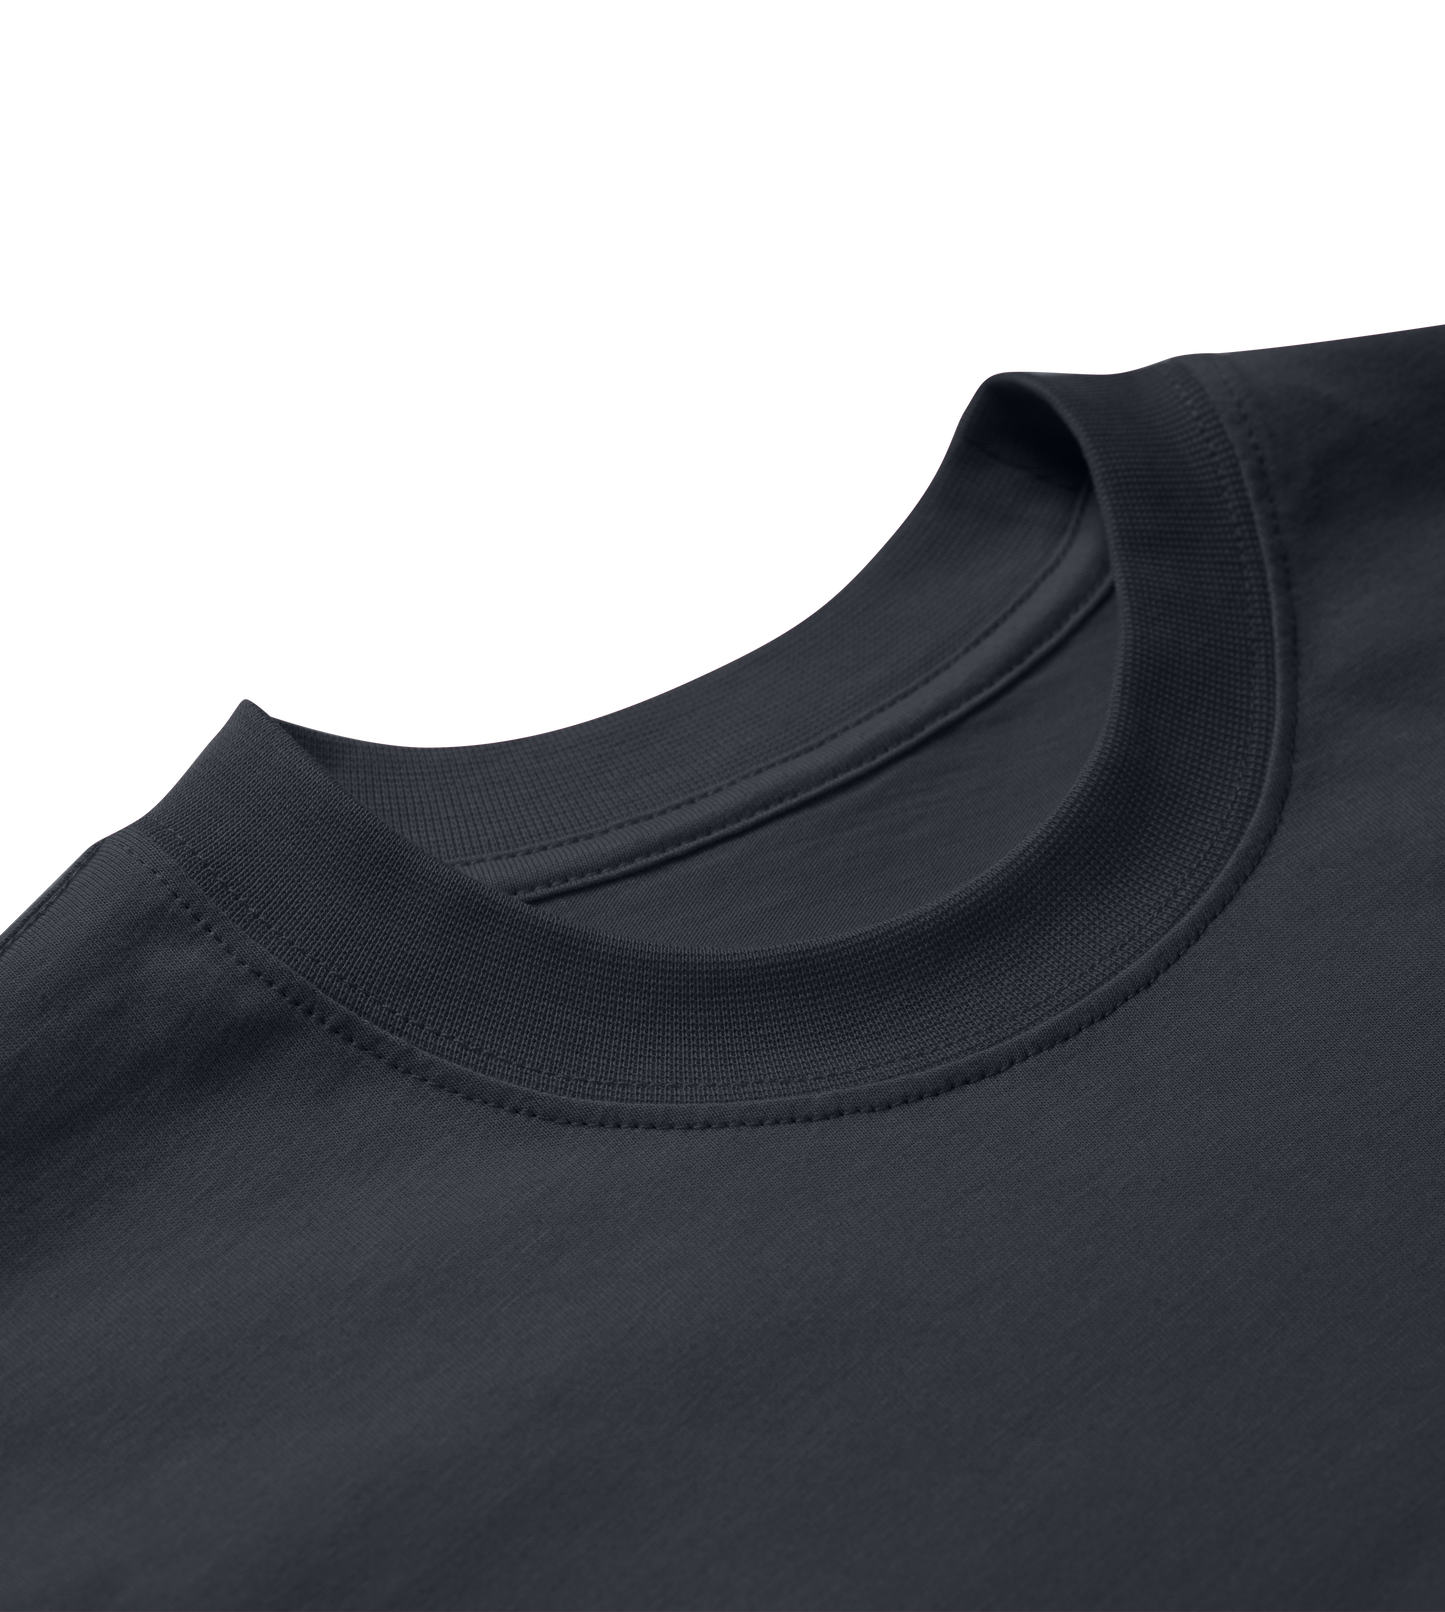 RAMMOR OLDSCHOOL T-SHIRT OFF-BLACK - Oversize Unisex Organic Cotton T-Shirt